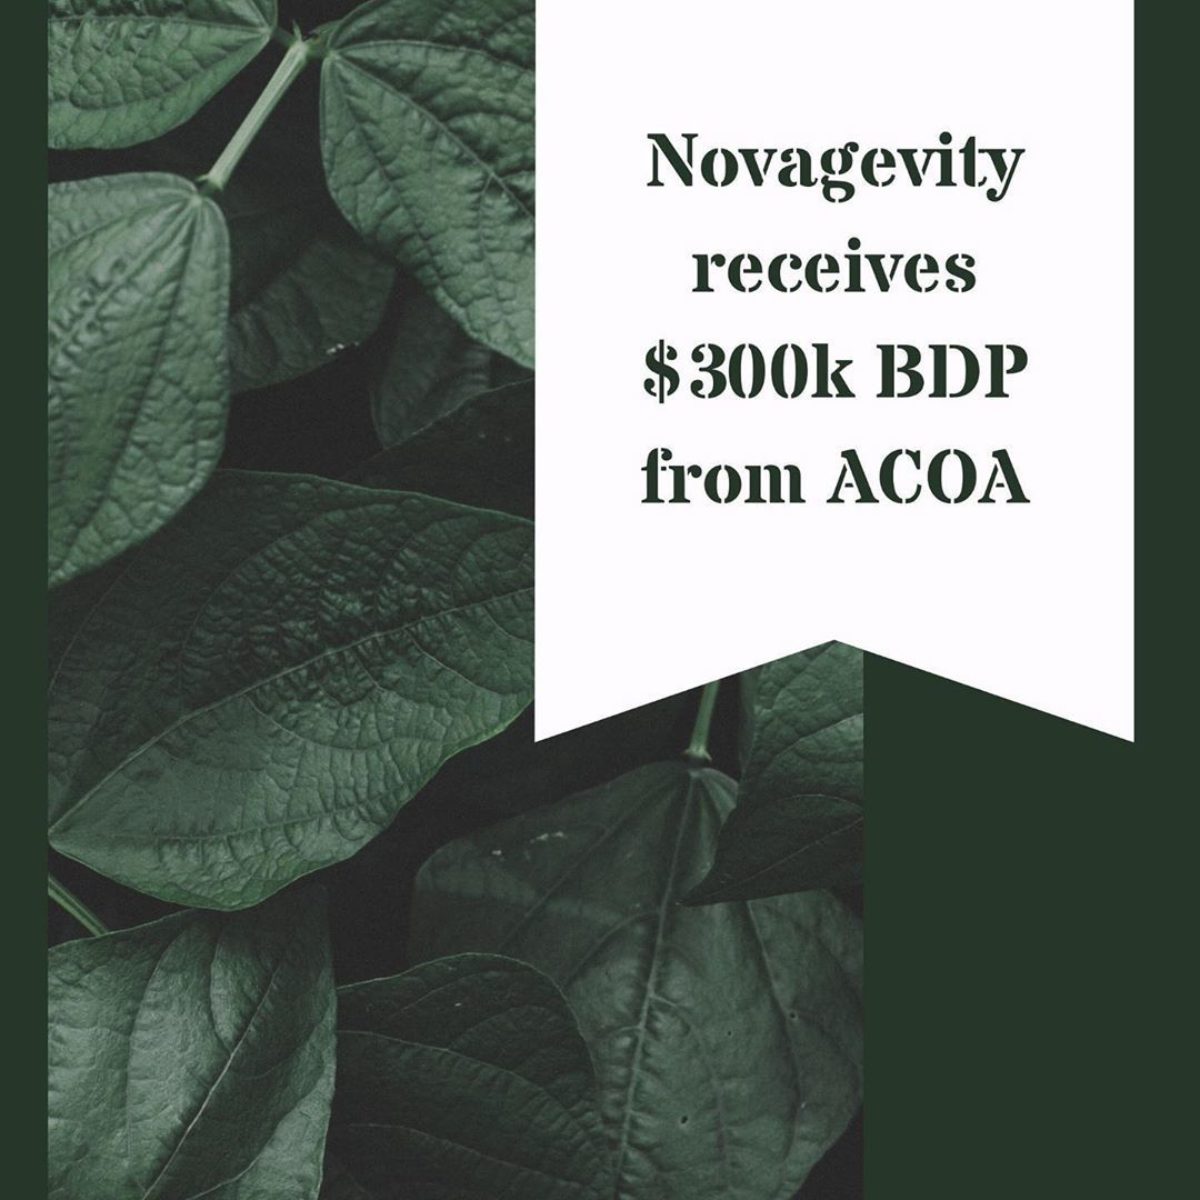 Novagevity receives 300 acoa